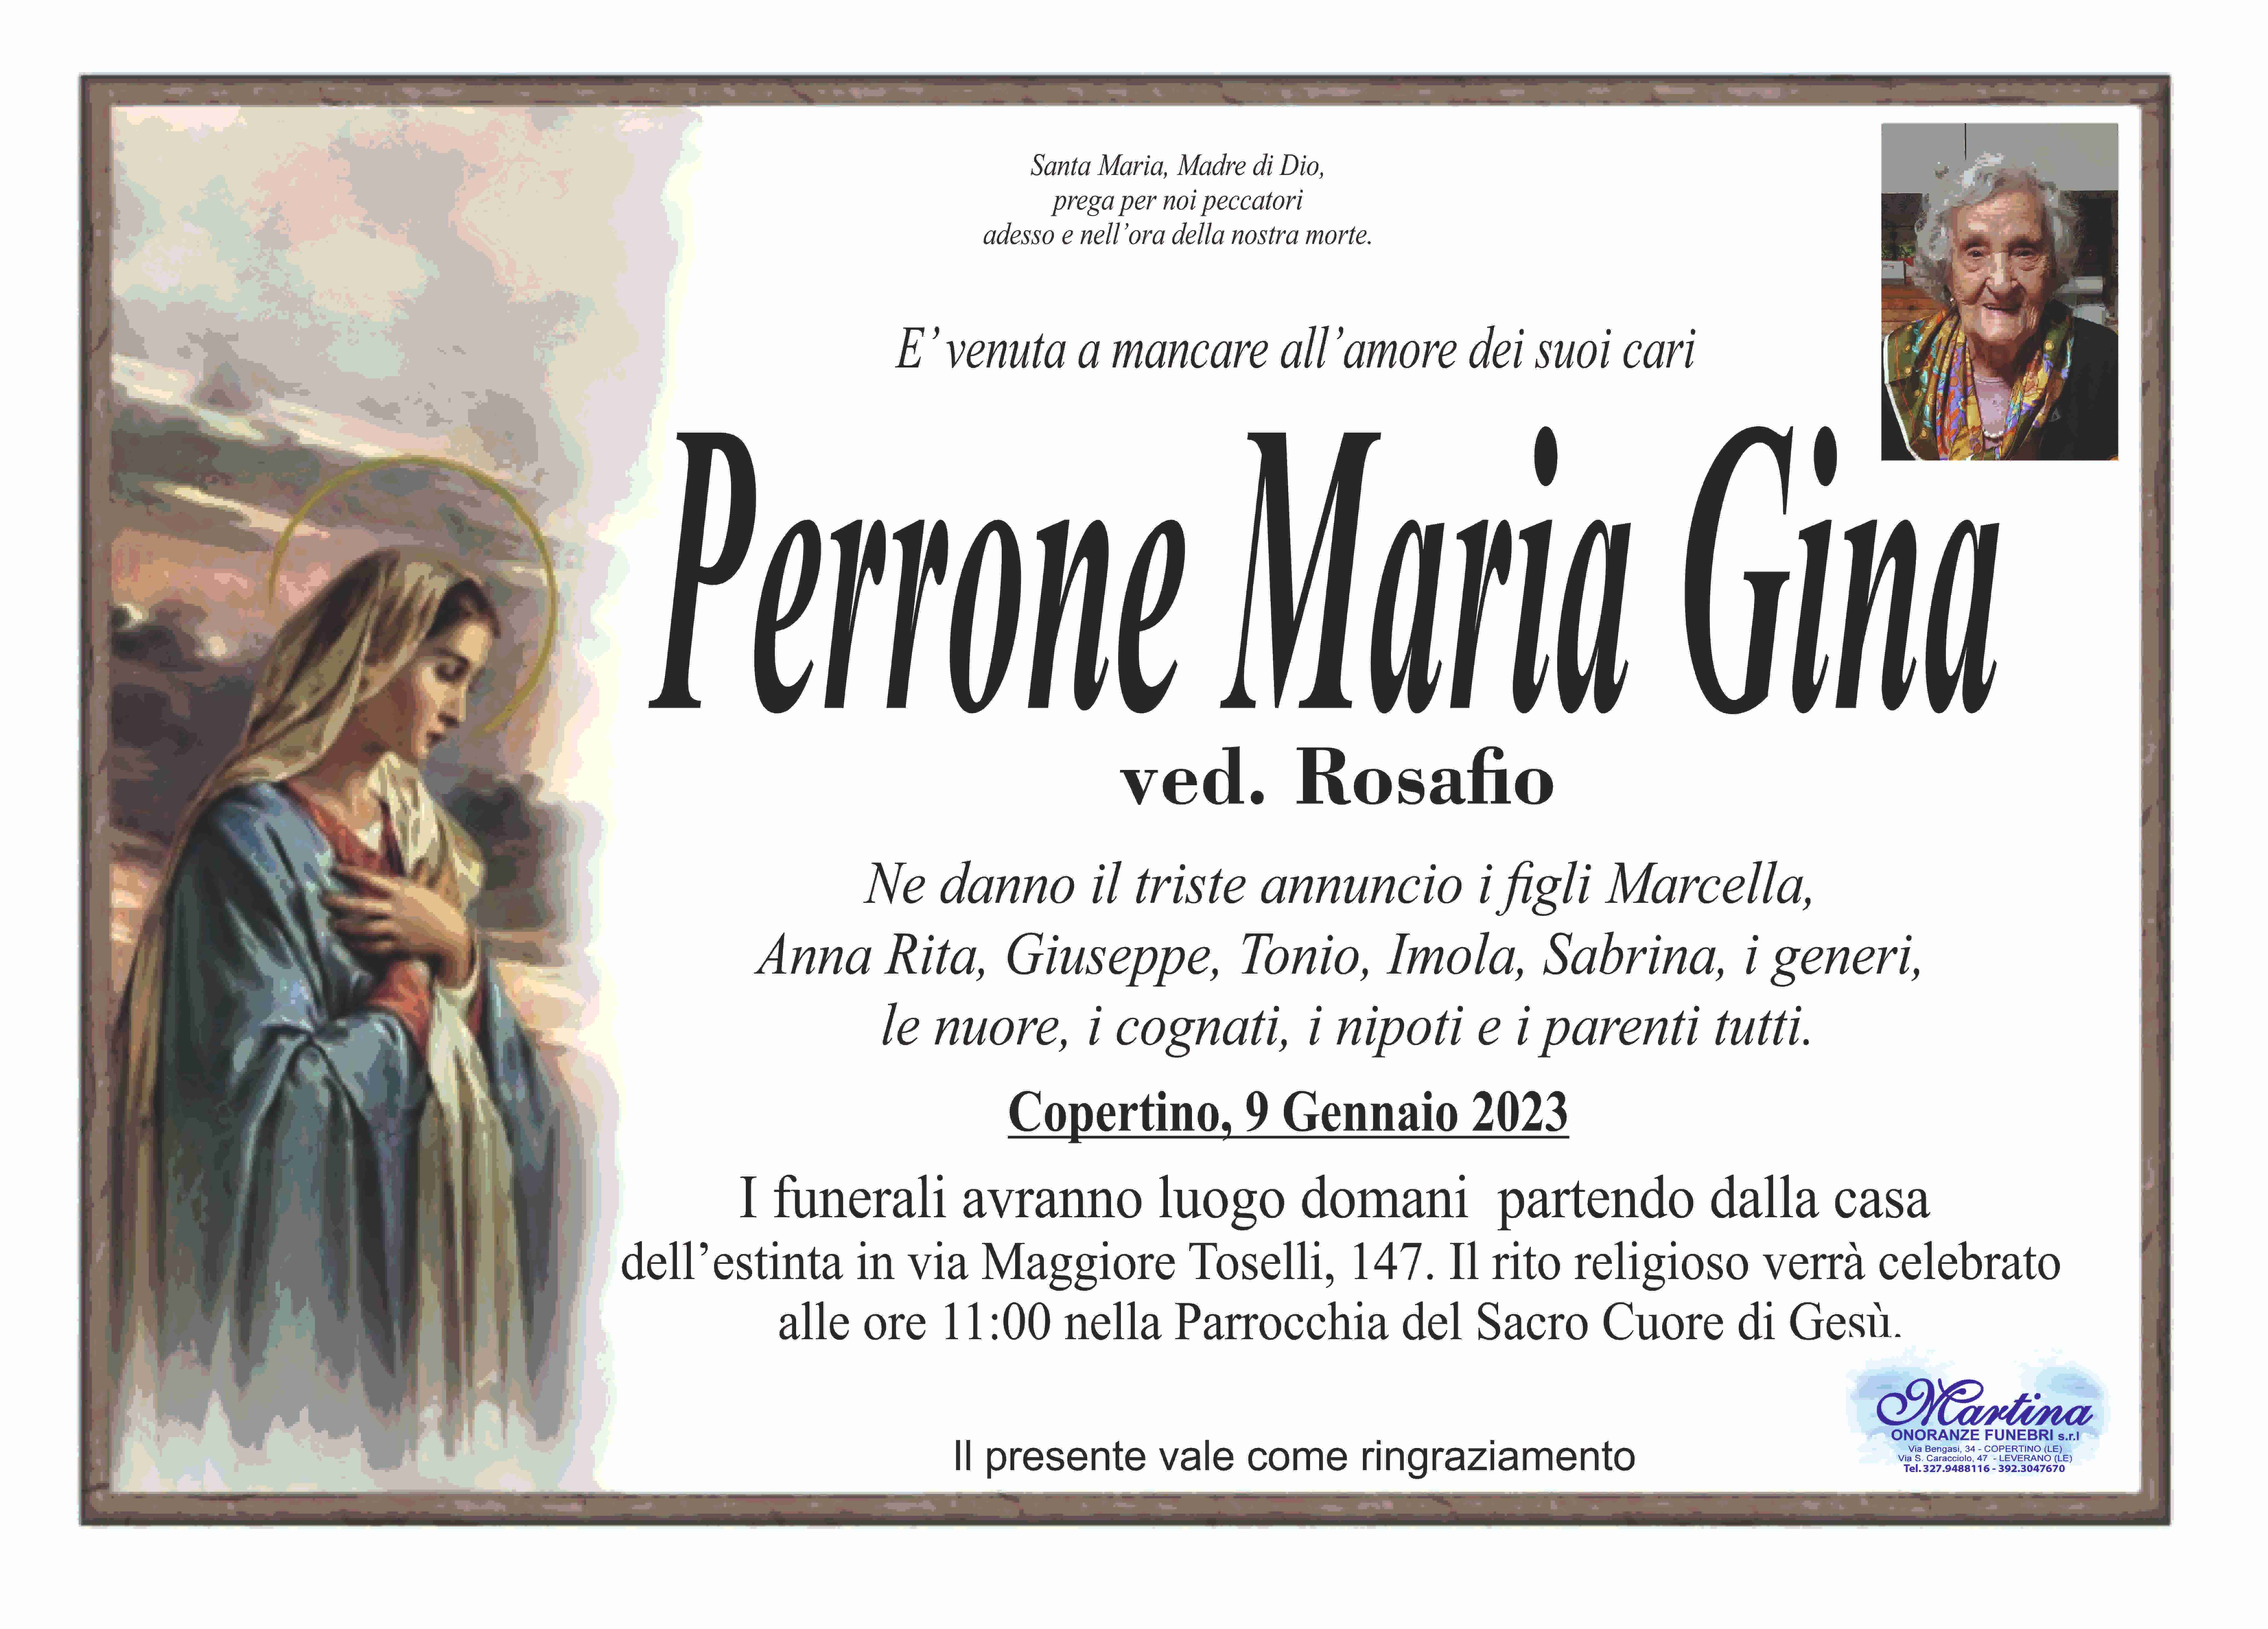 Maria Gina Perrone